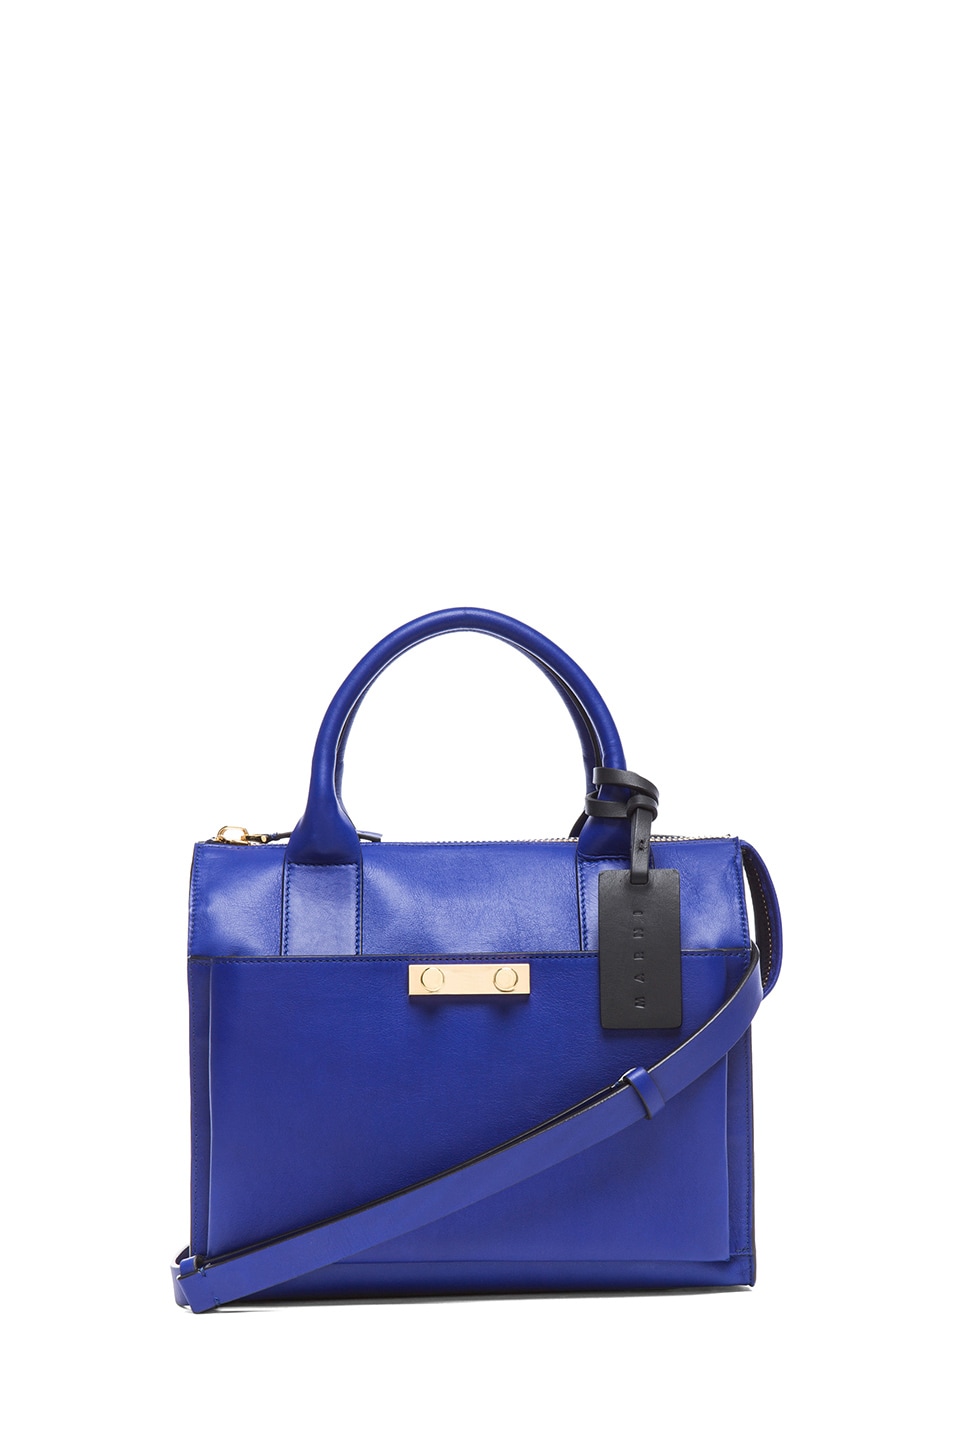 Marni Calf Leather Handbag in Bluette | FWRD